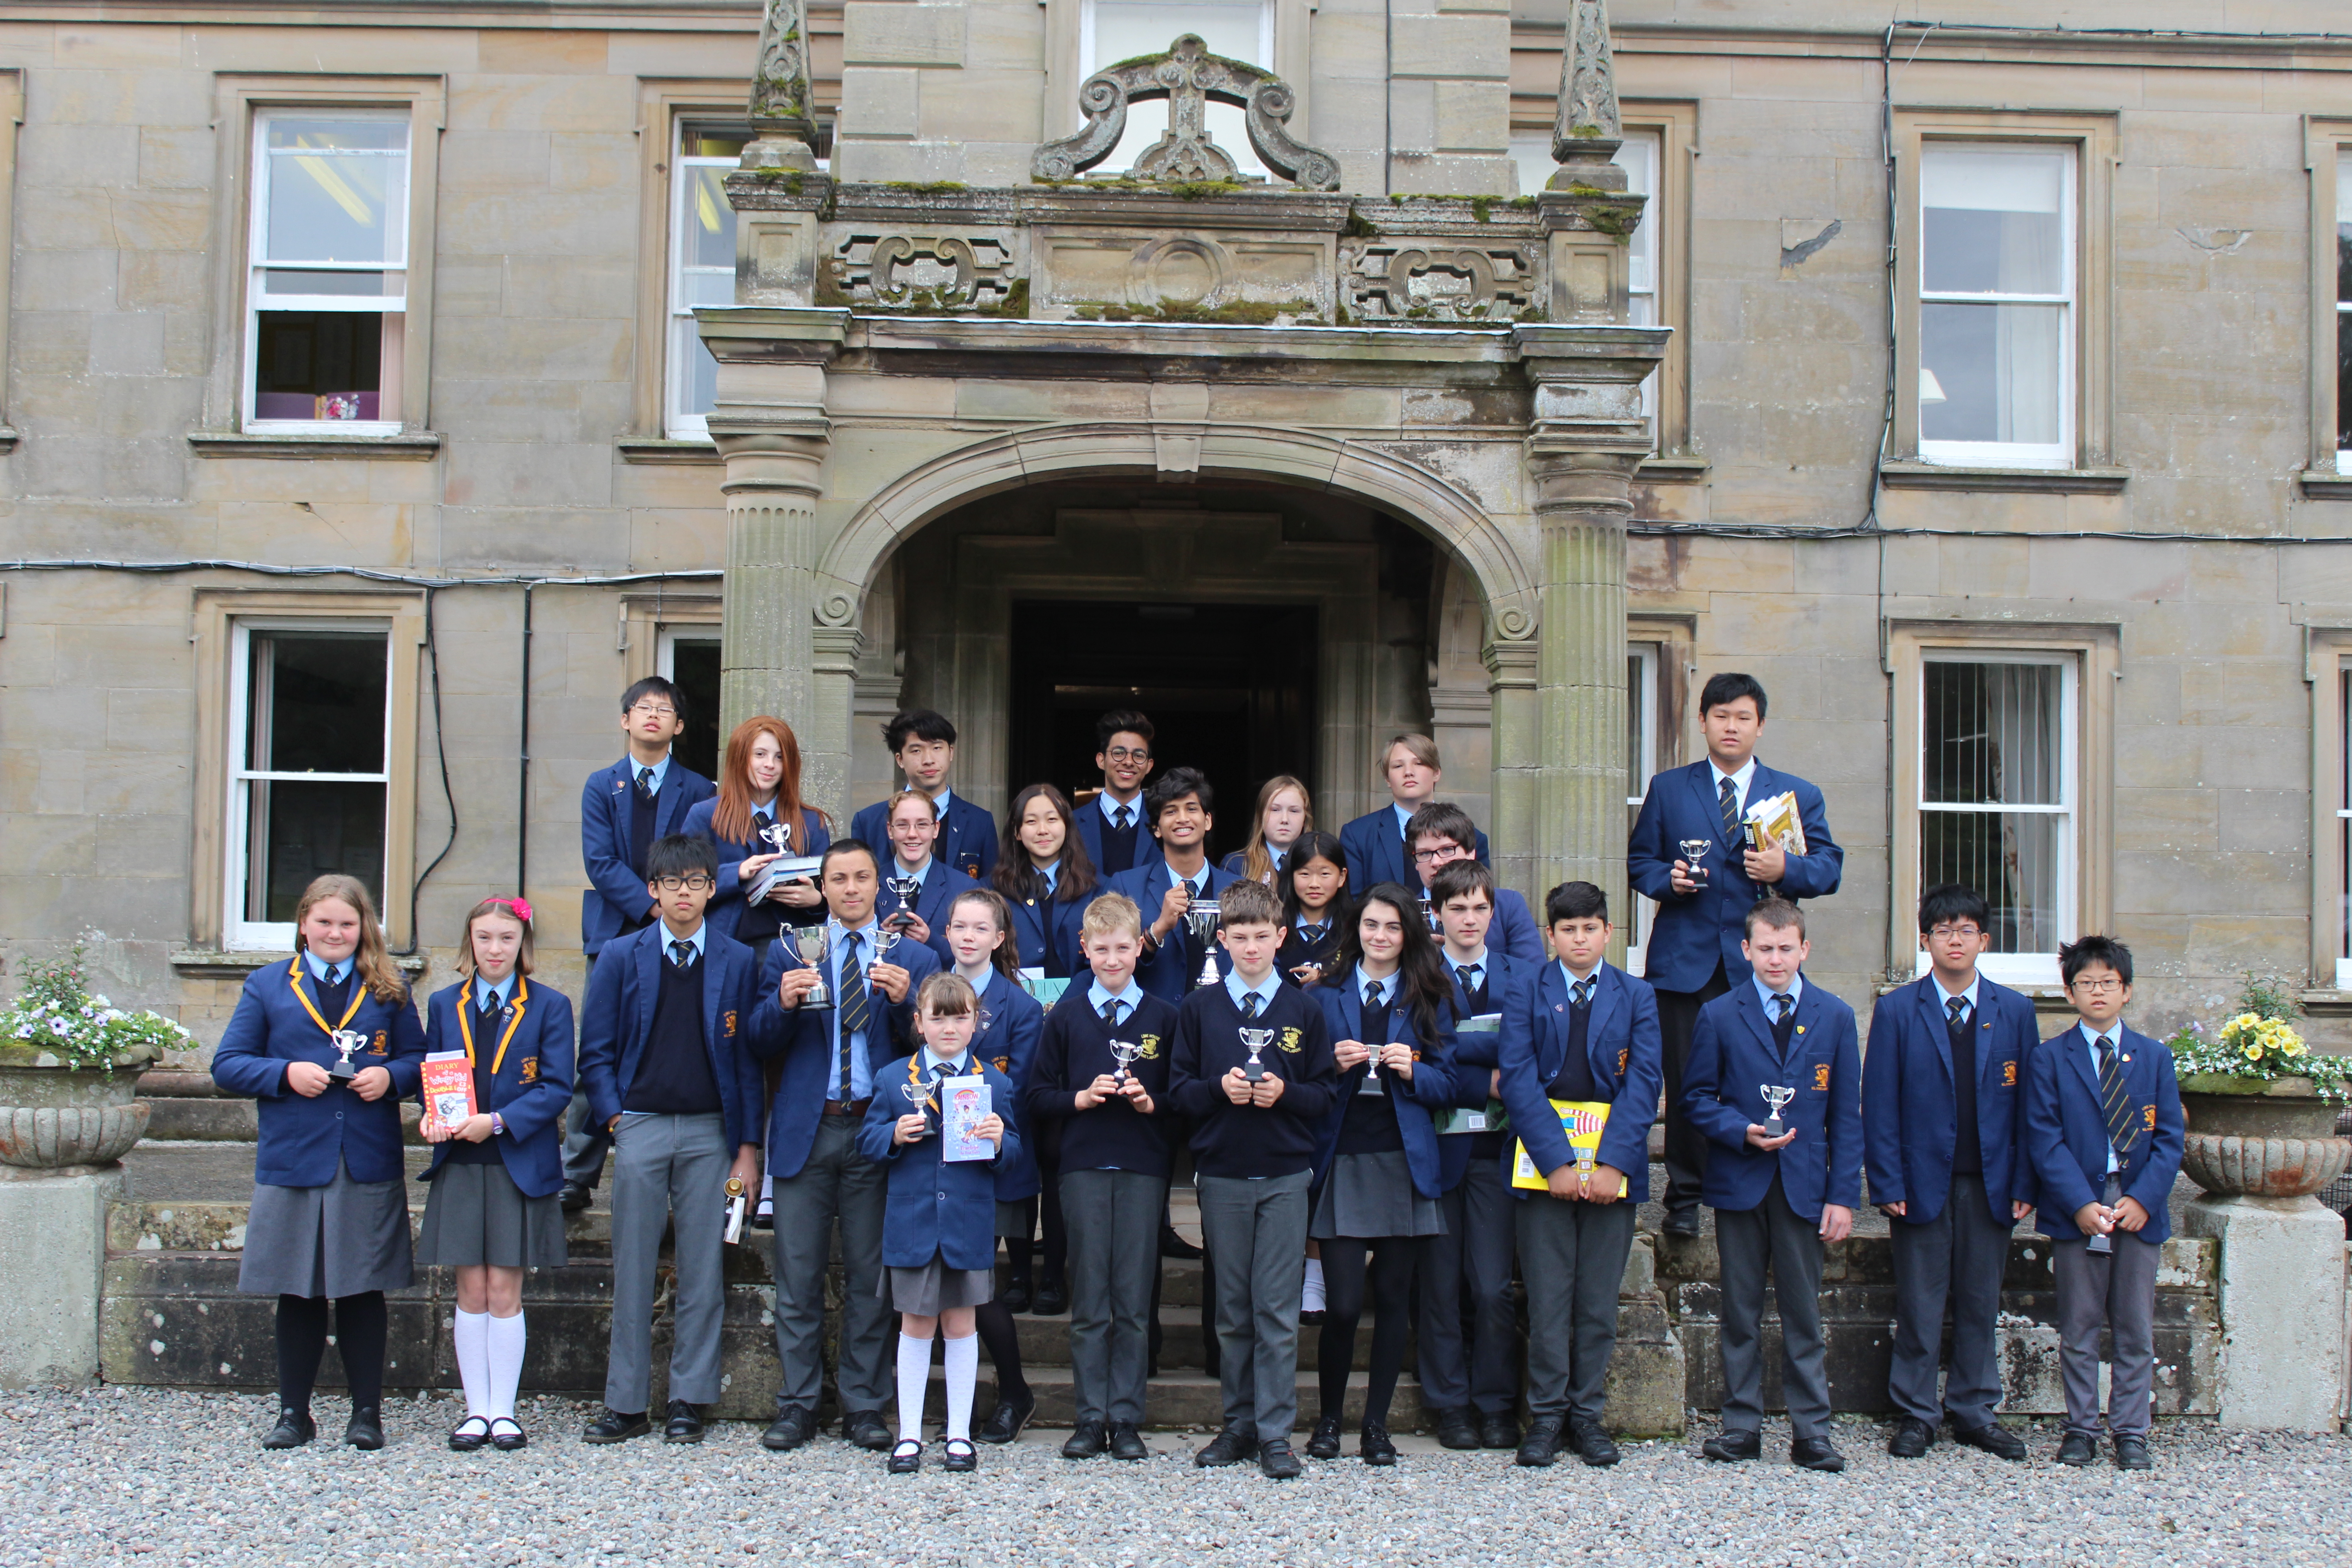 UK Boarding School students outside of a British Boarding School holding awards